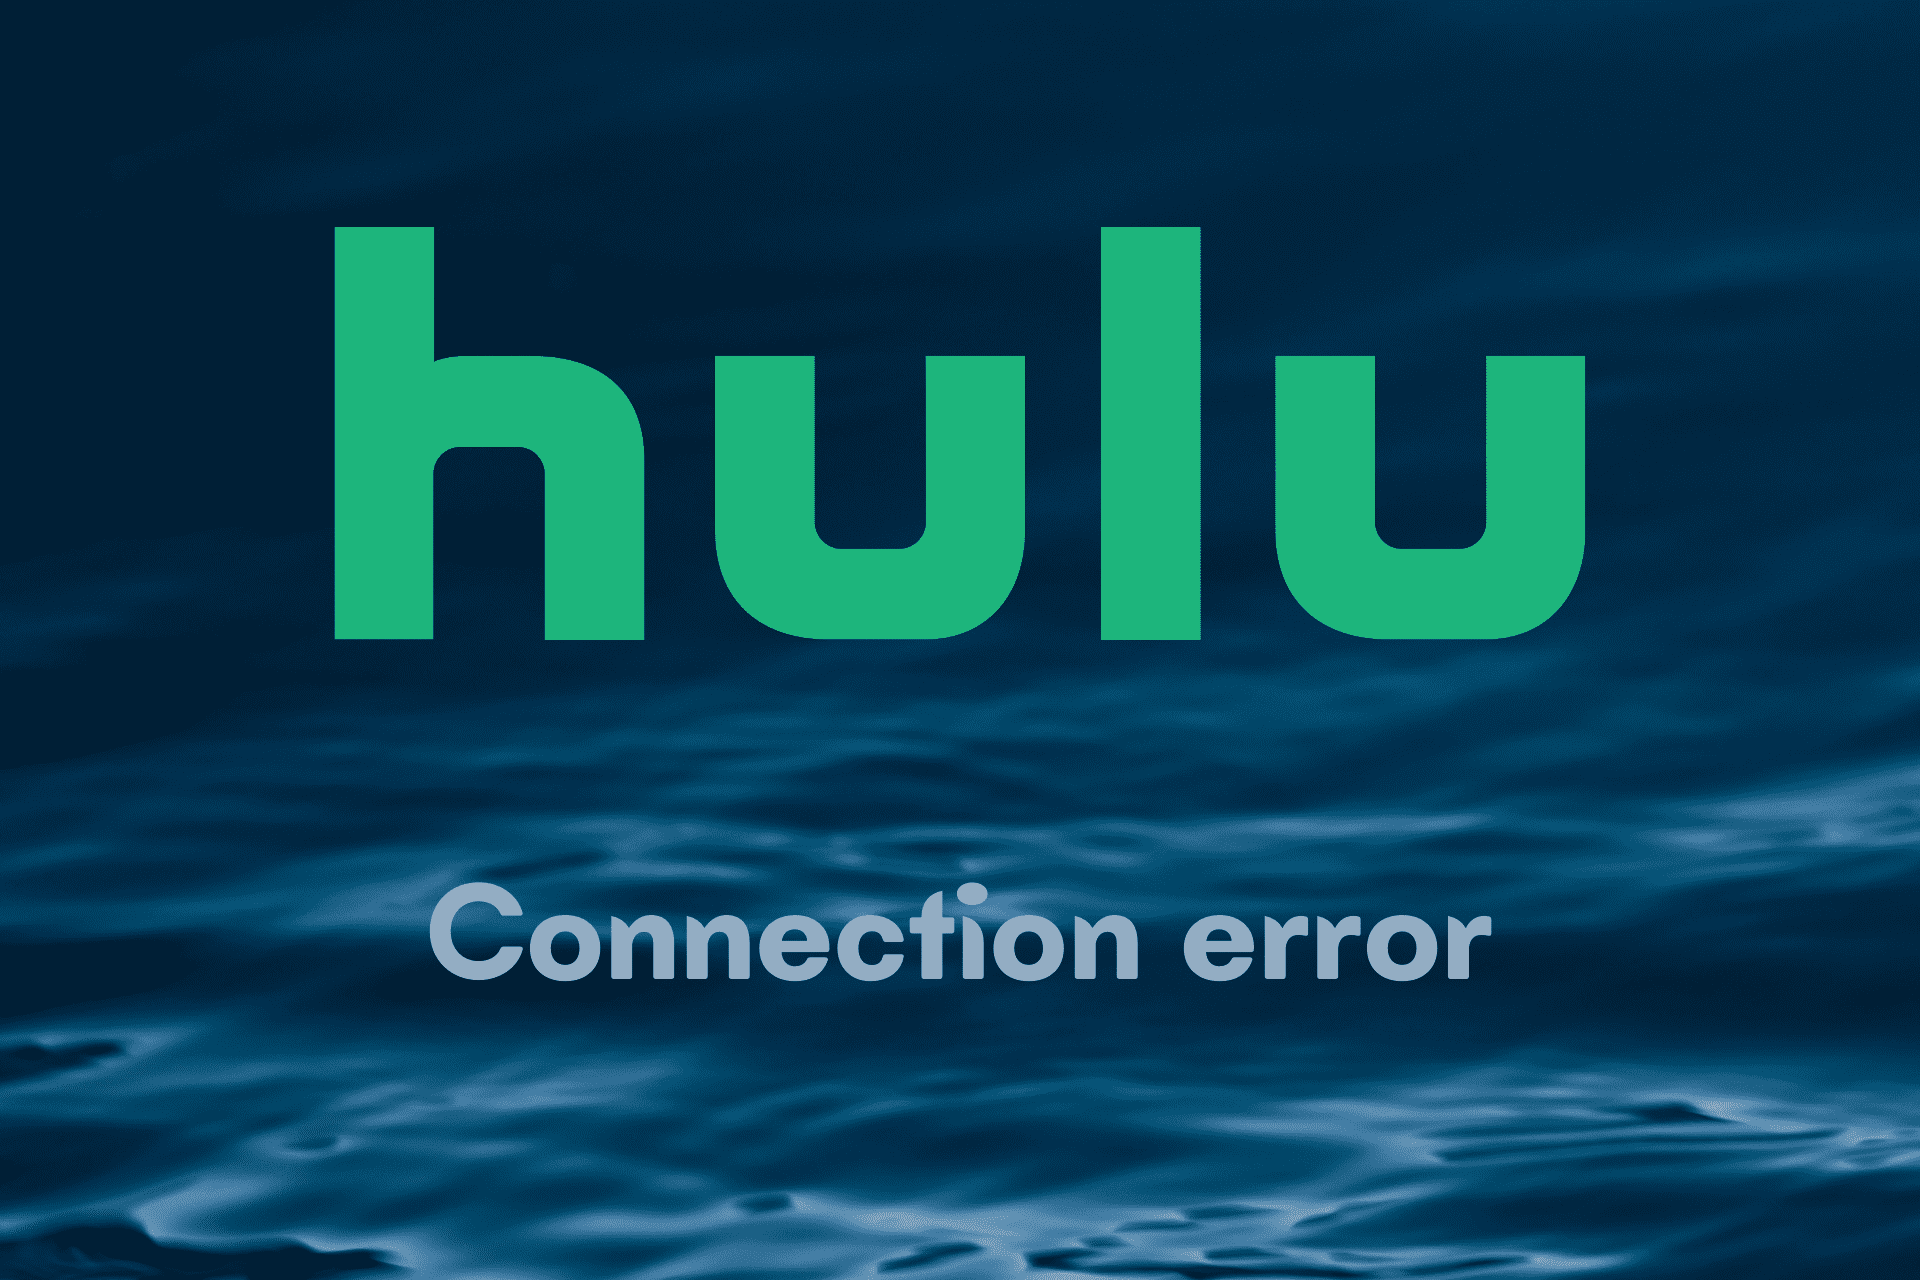 Fix Hulu Connection error